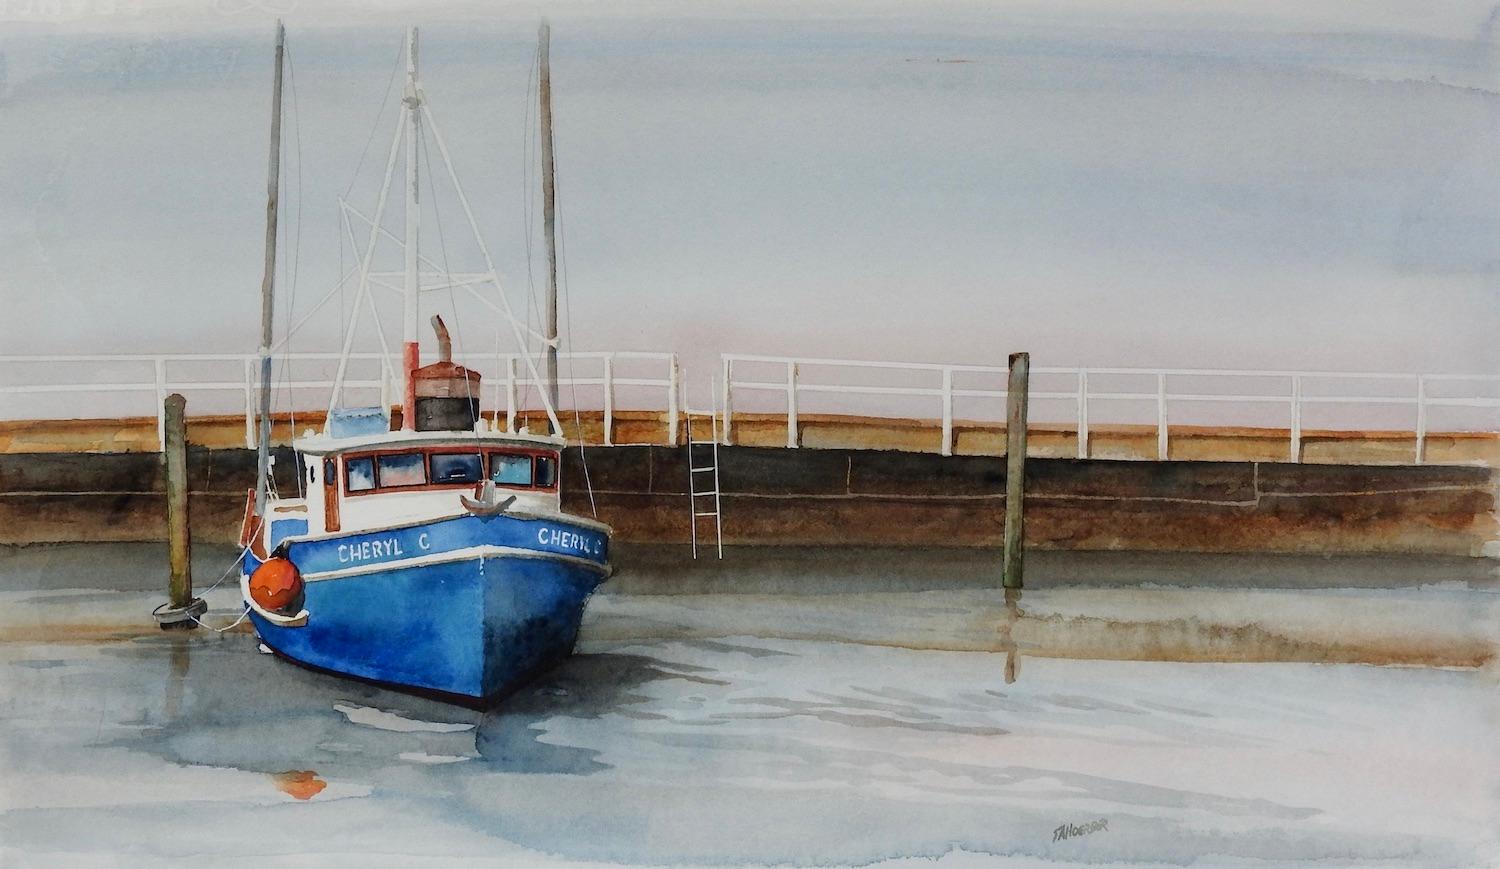 Cheryl C at Dock, Original Painting - Art by Thomas Hoerber